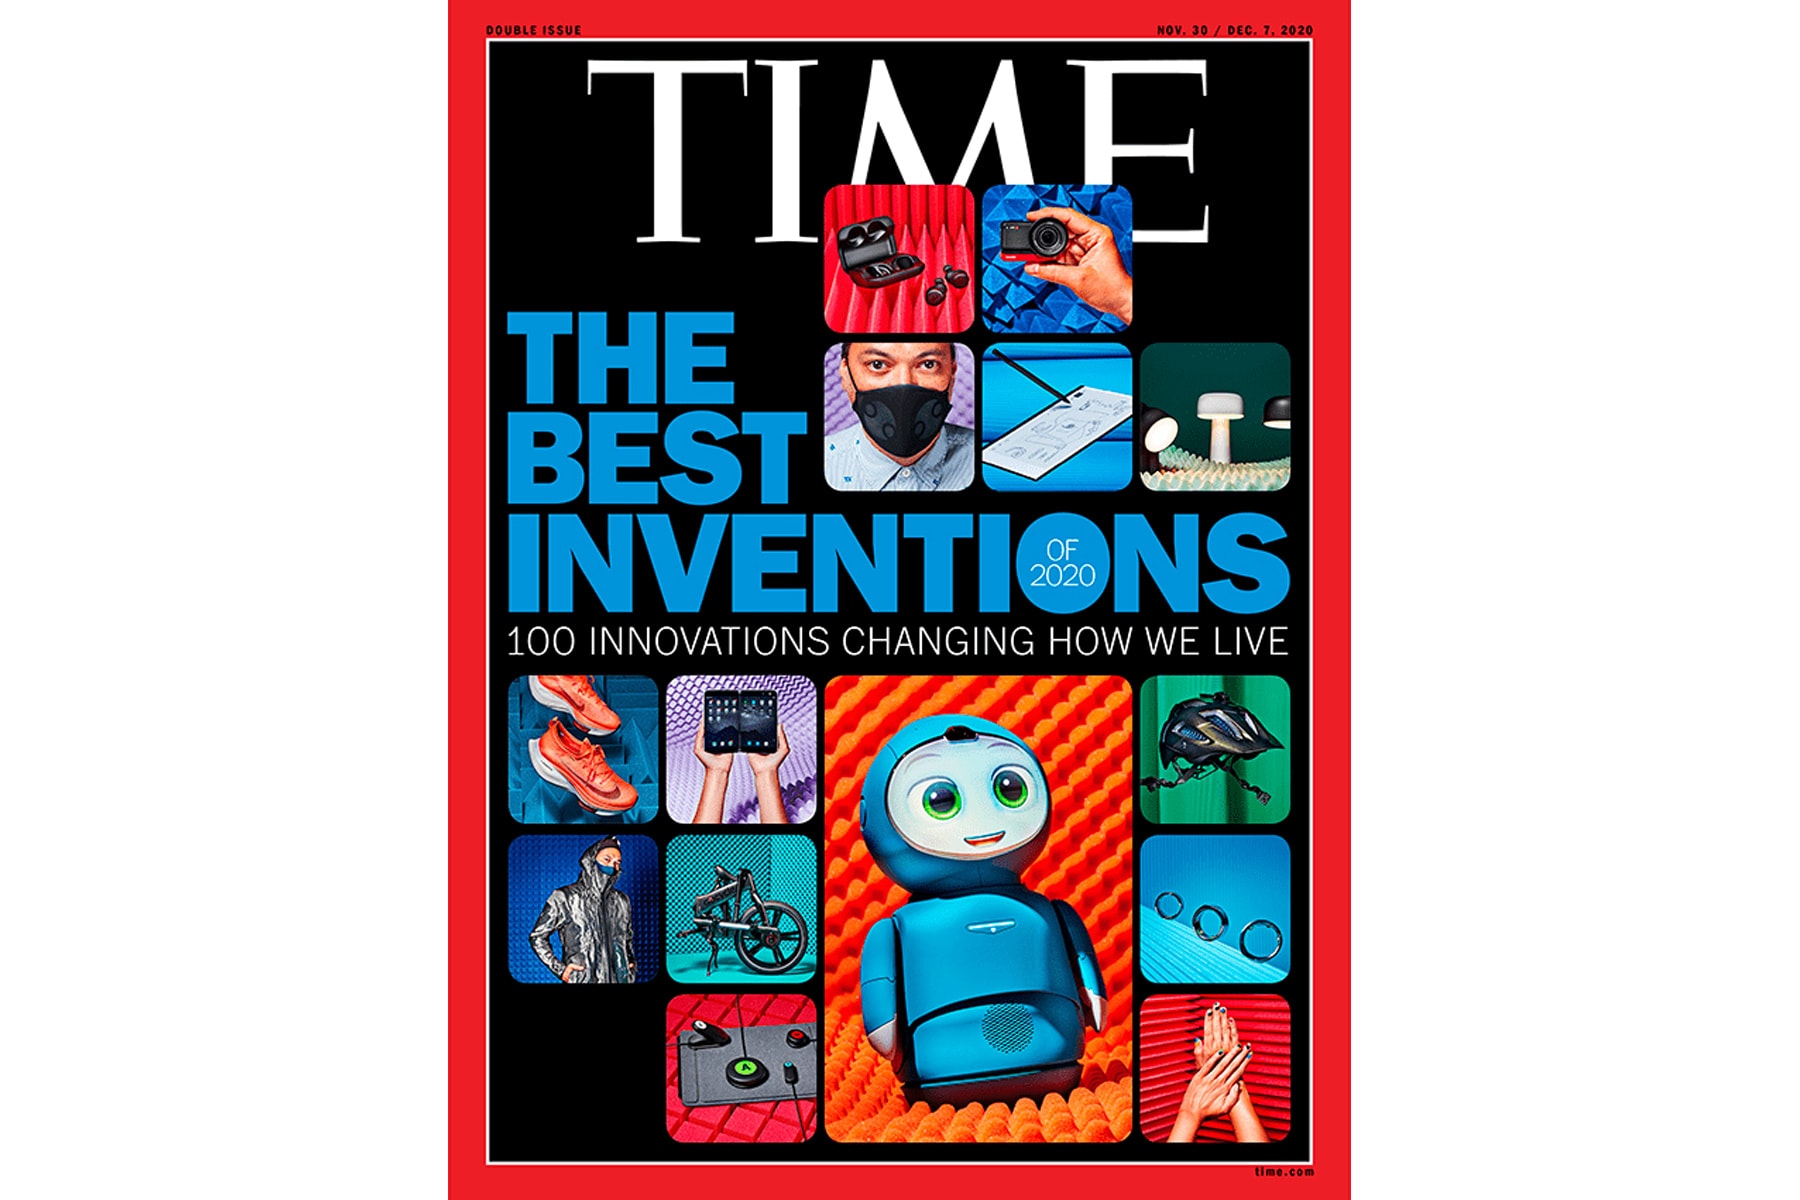 《TIME》公佈 2020 年度百大最佳發明排名